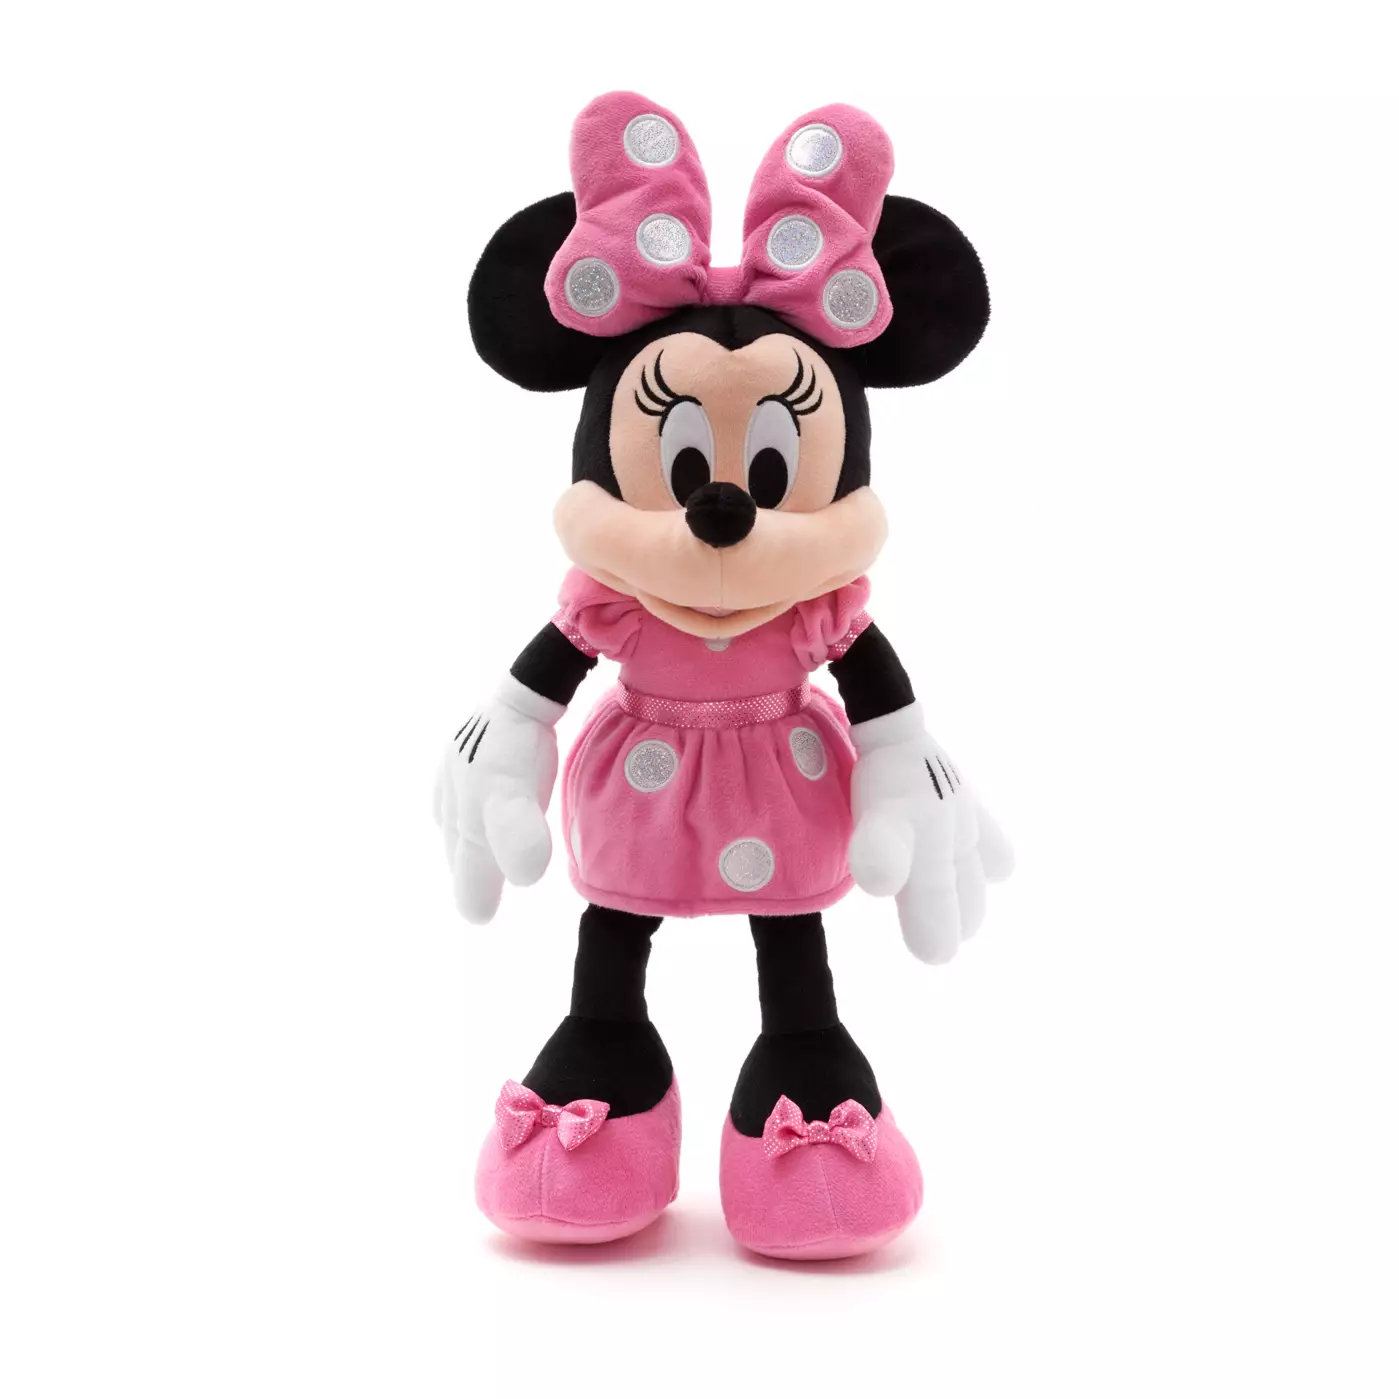 Disney Store Minnie Mouse Medium Soft Toy